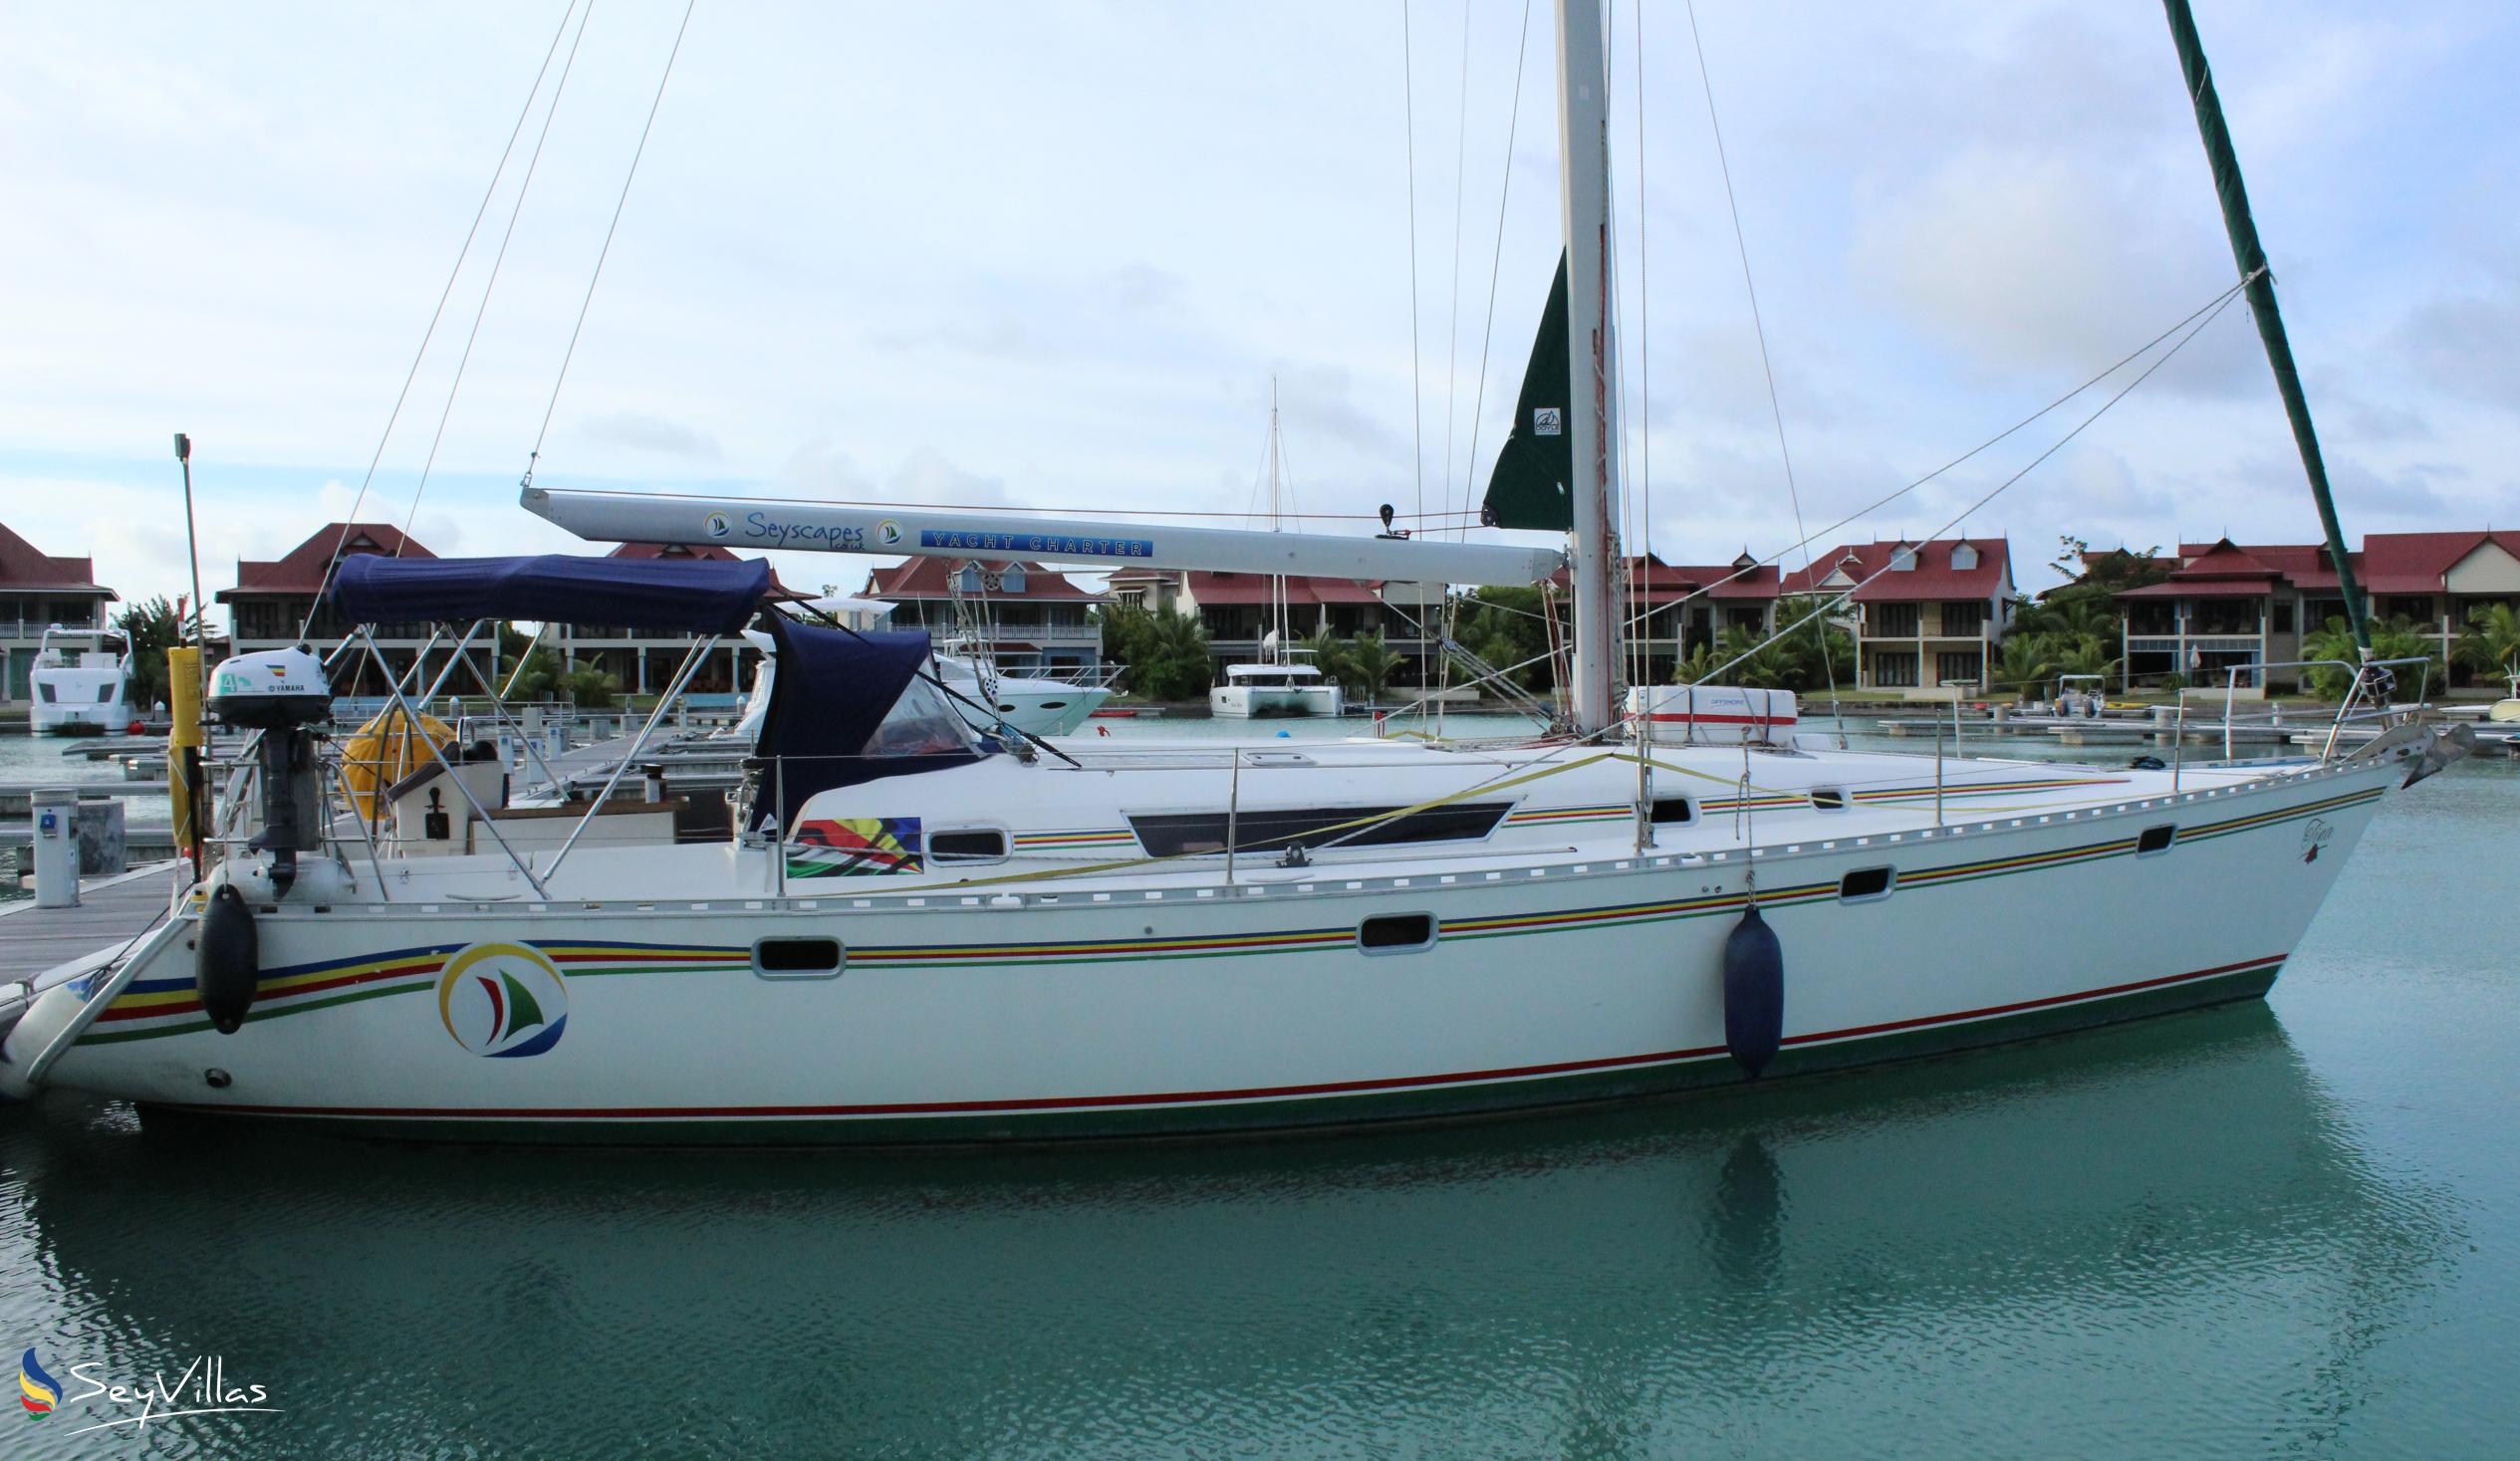 Foto 26: Seyscapes Yacht Charter - Charter Completo Tina - Seychelles (Seychelles)